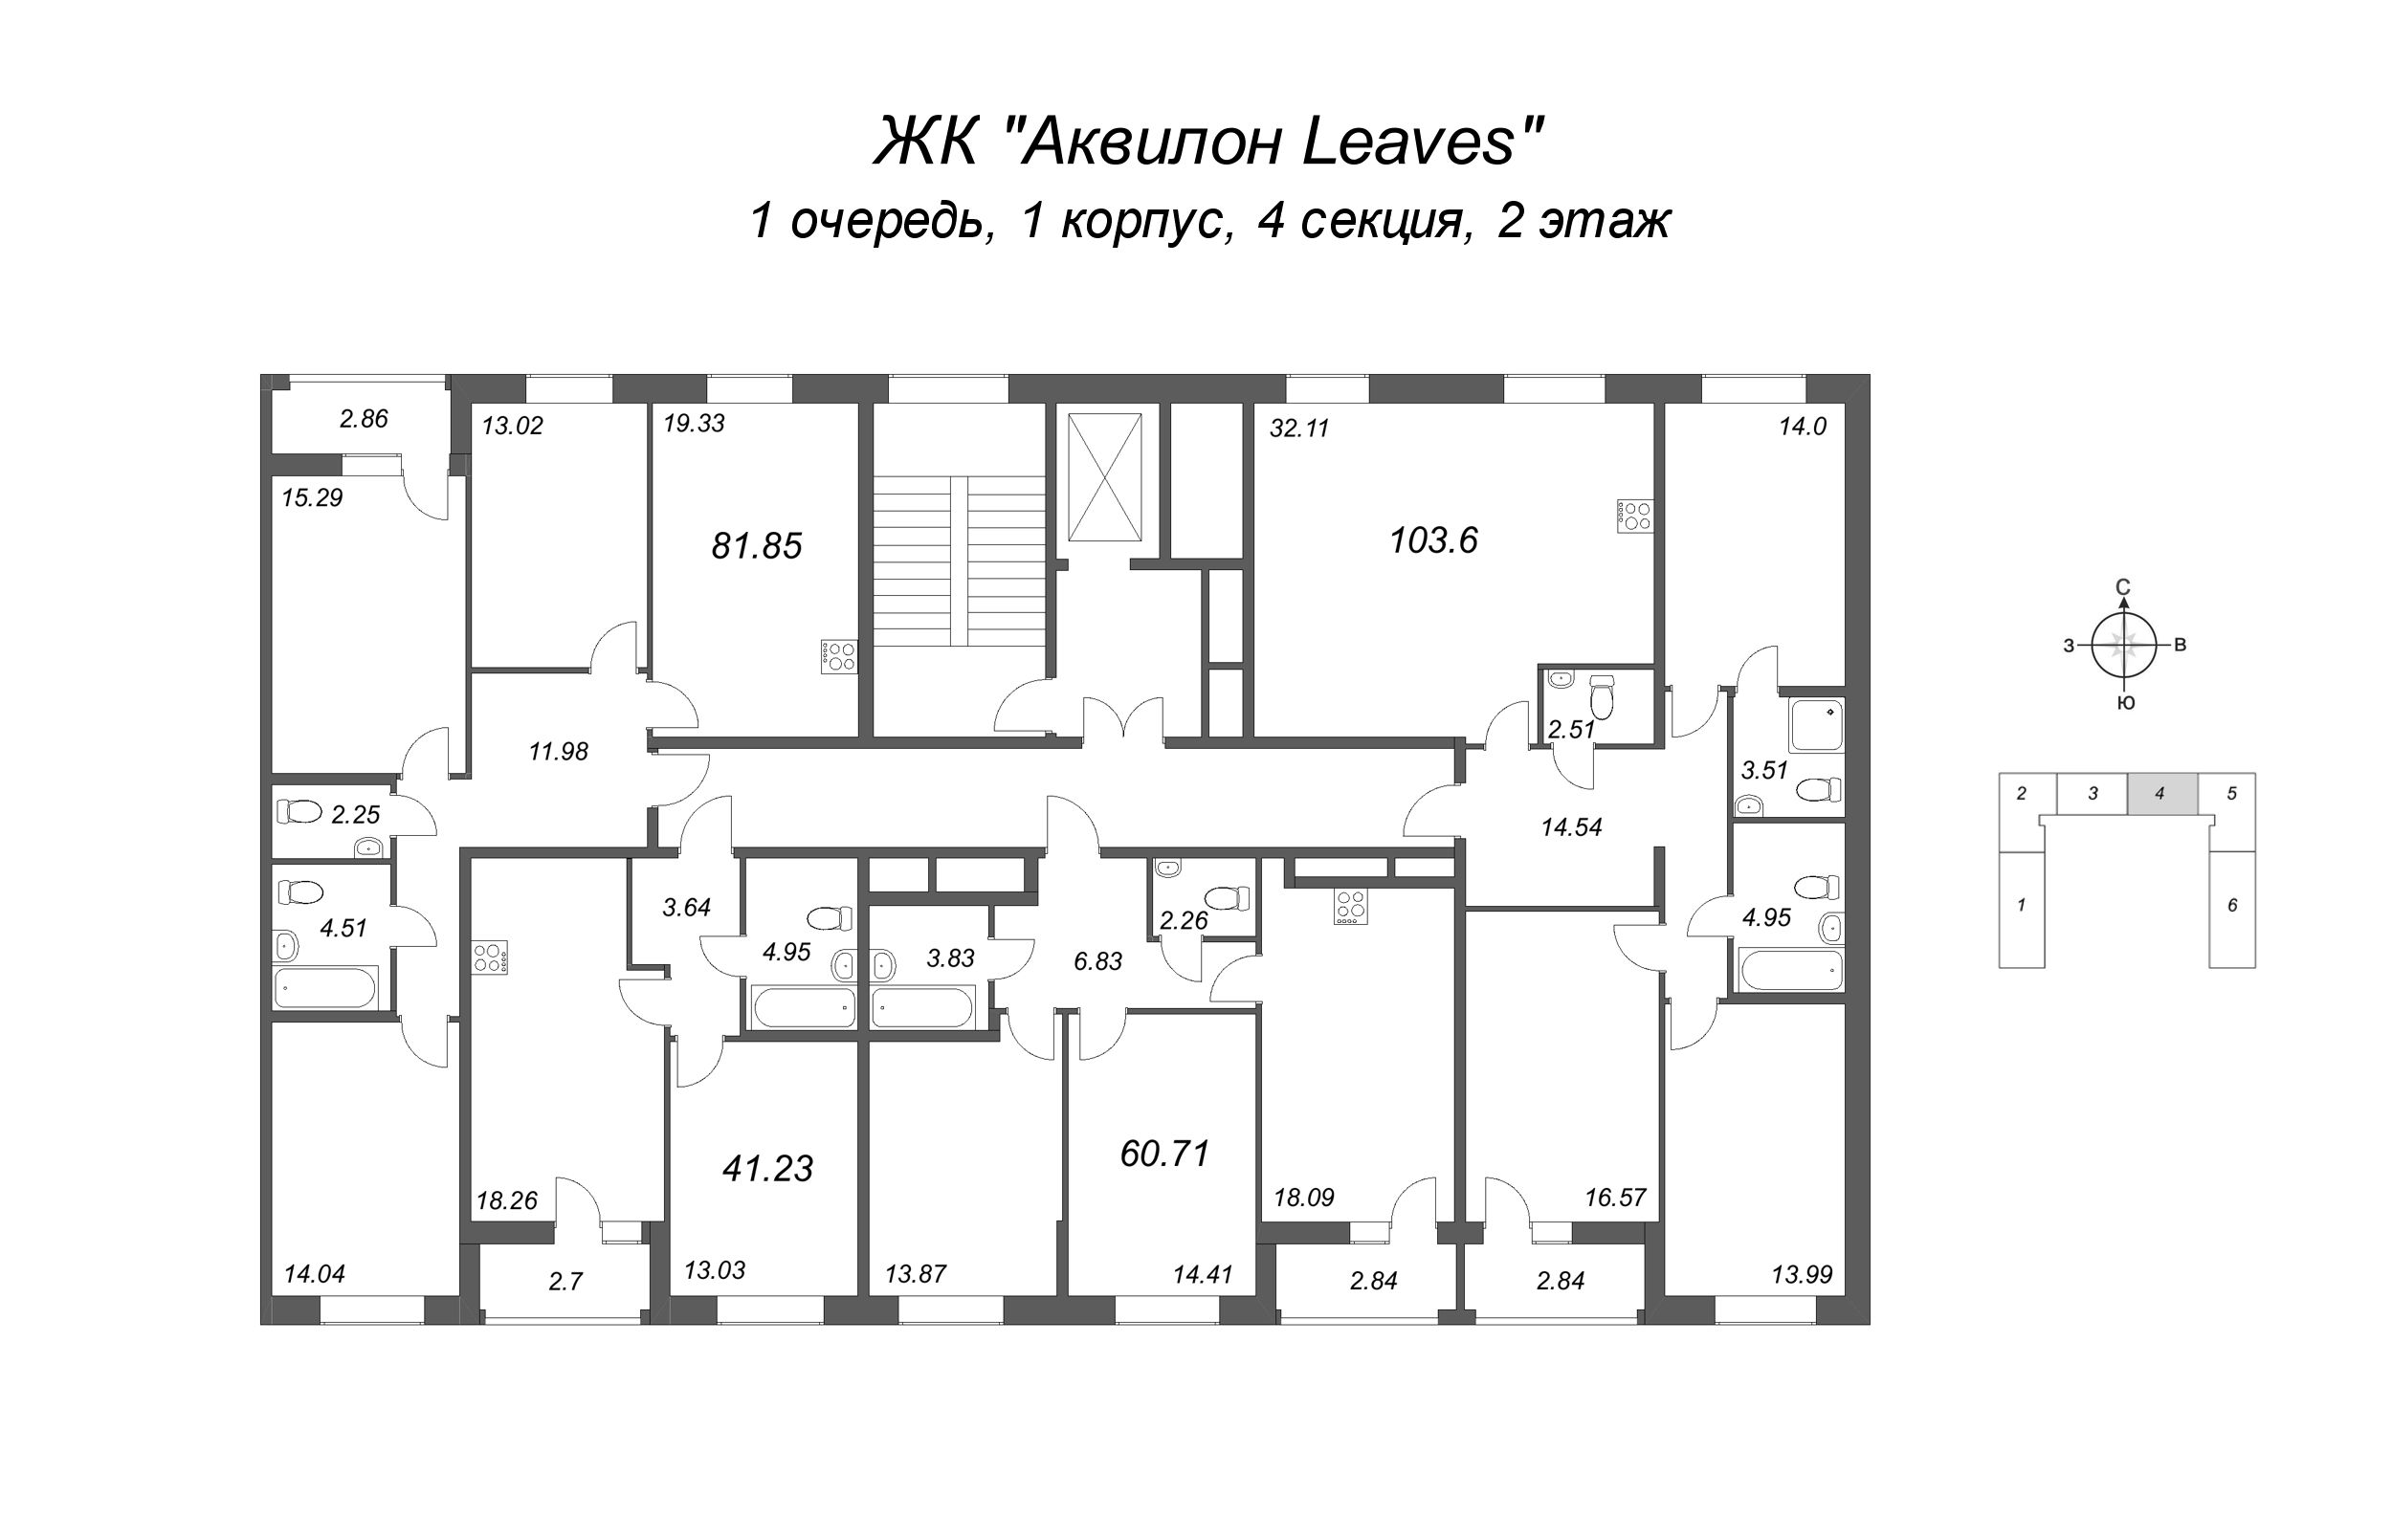 4-комнатная (Евро) квартира, 81.85 м² - планировка этажа